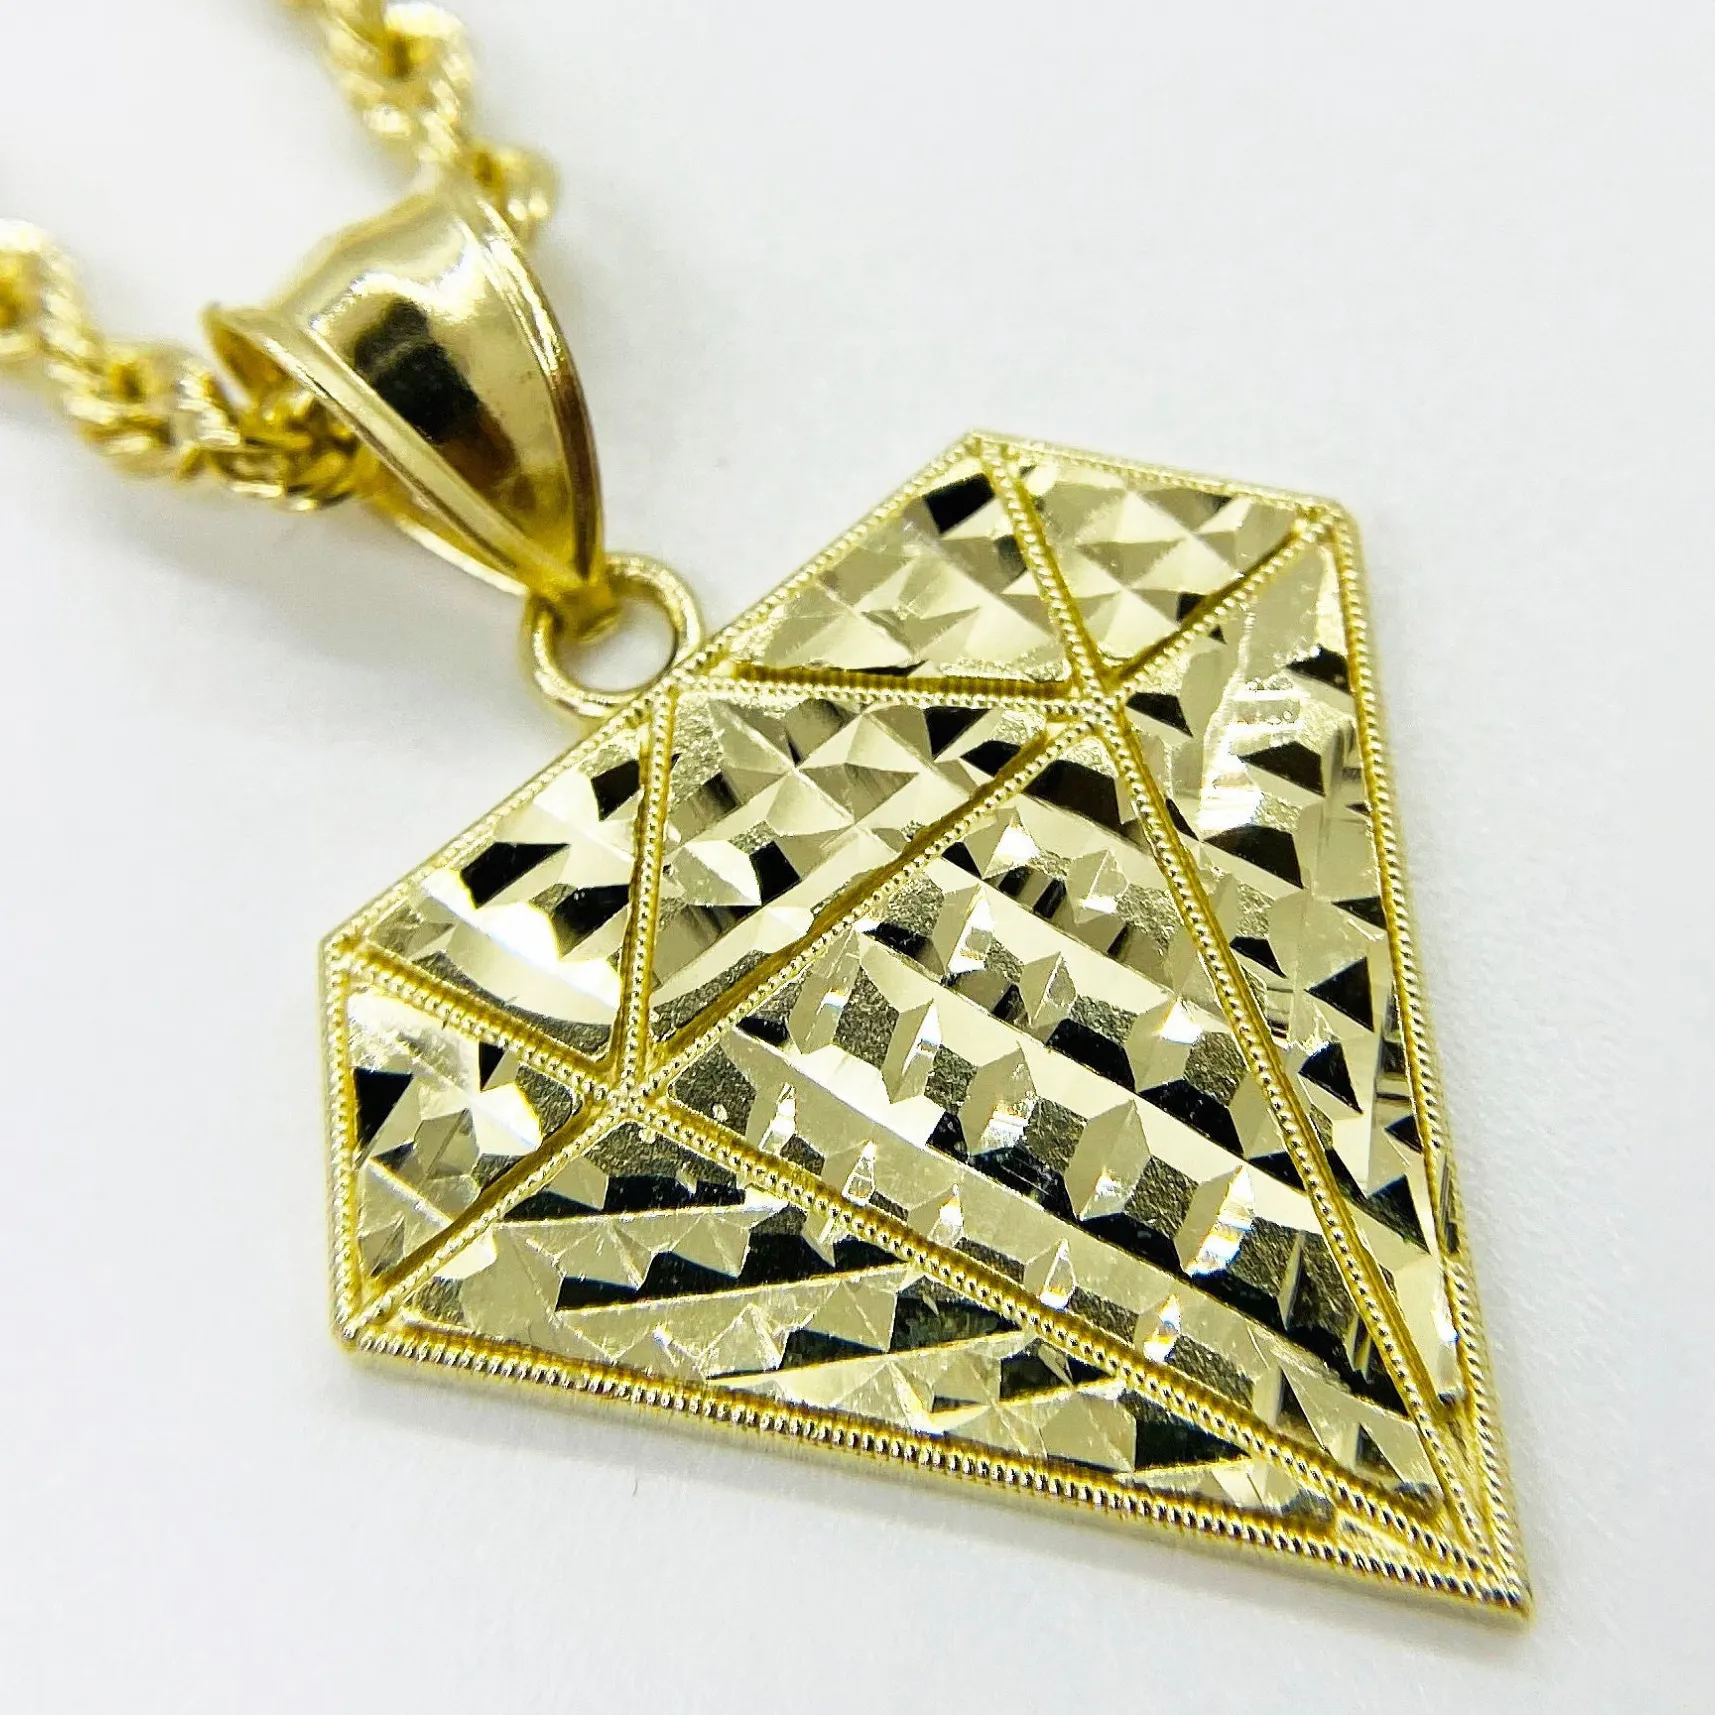 Duyizhao Hip Hop Unique Design 14k Gold Plated Diamond Shape Charm Pendant For Men Women Jewelry